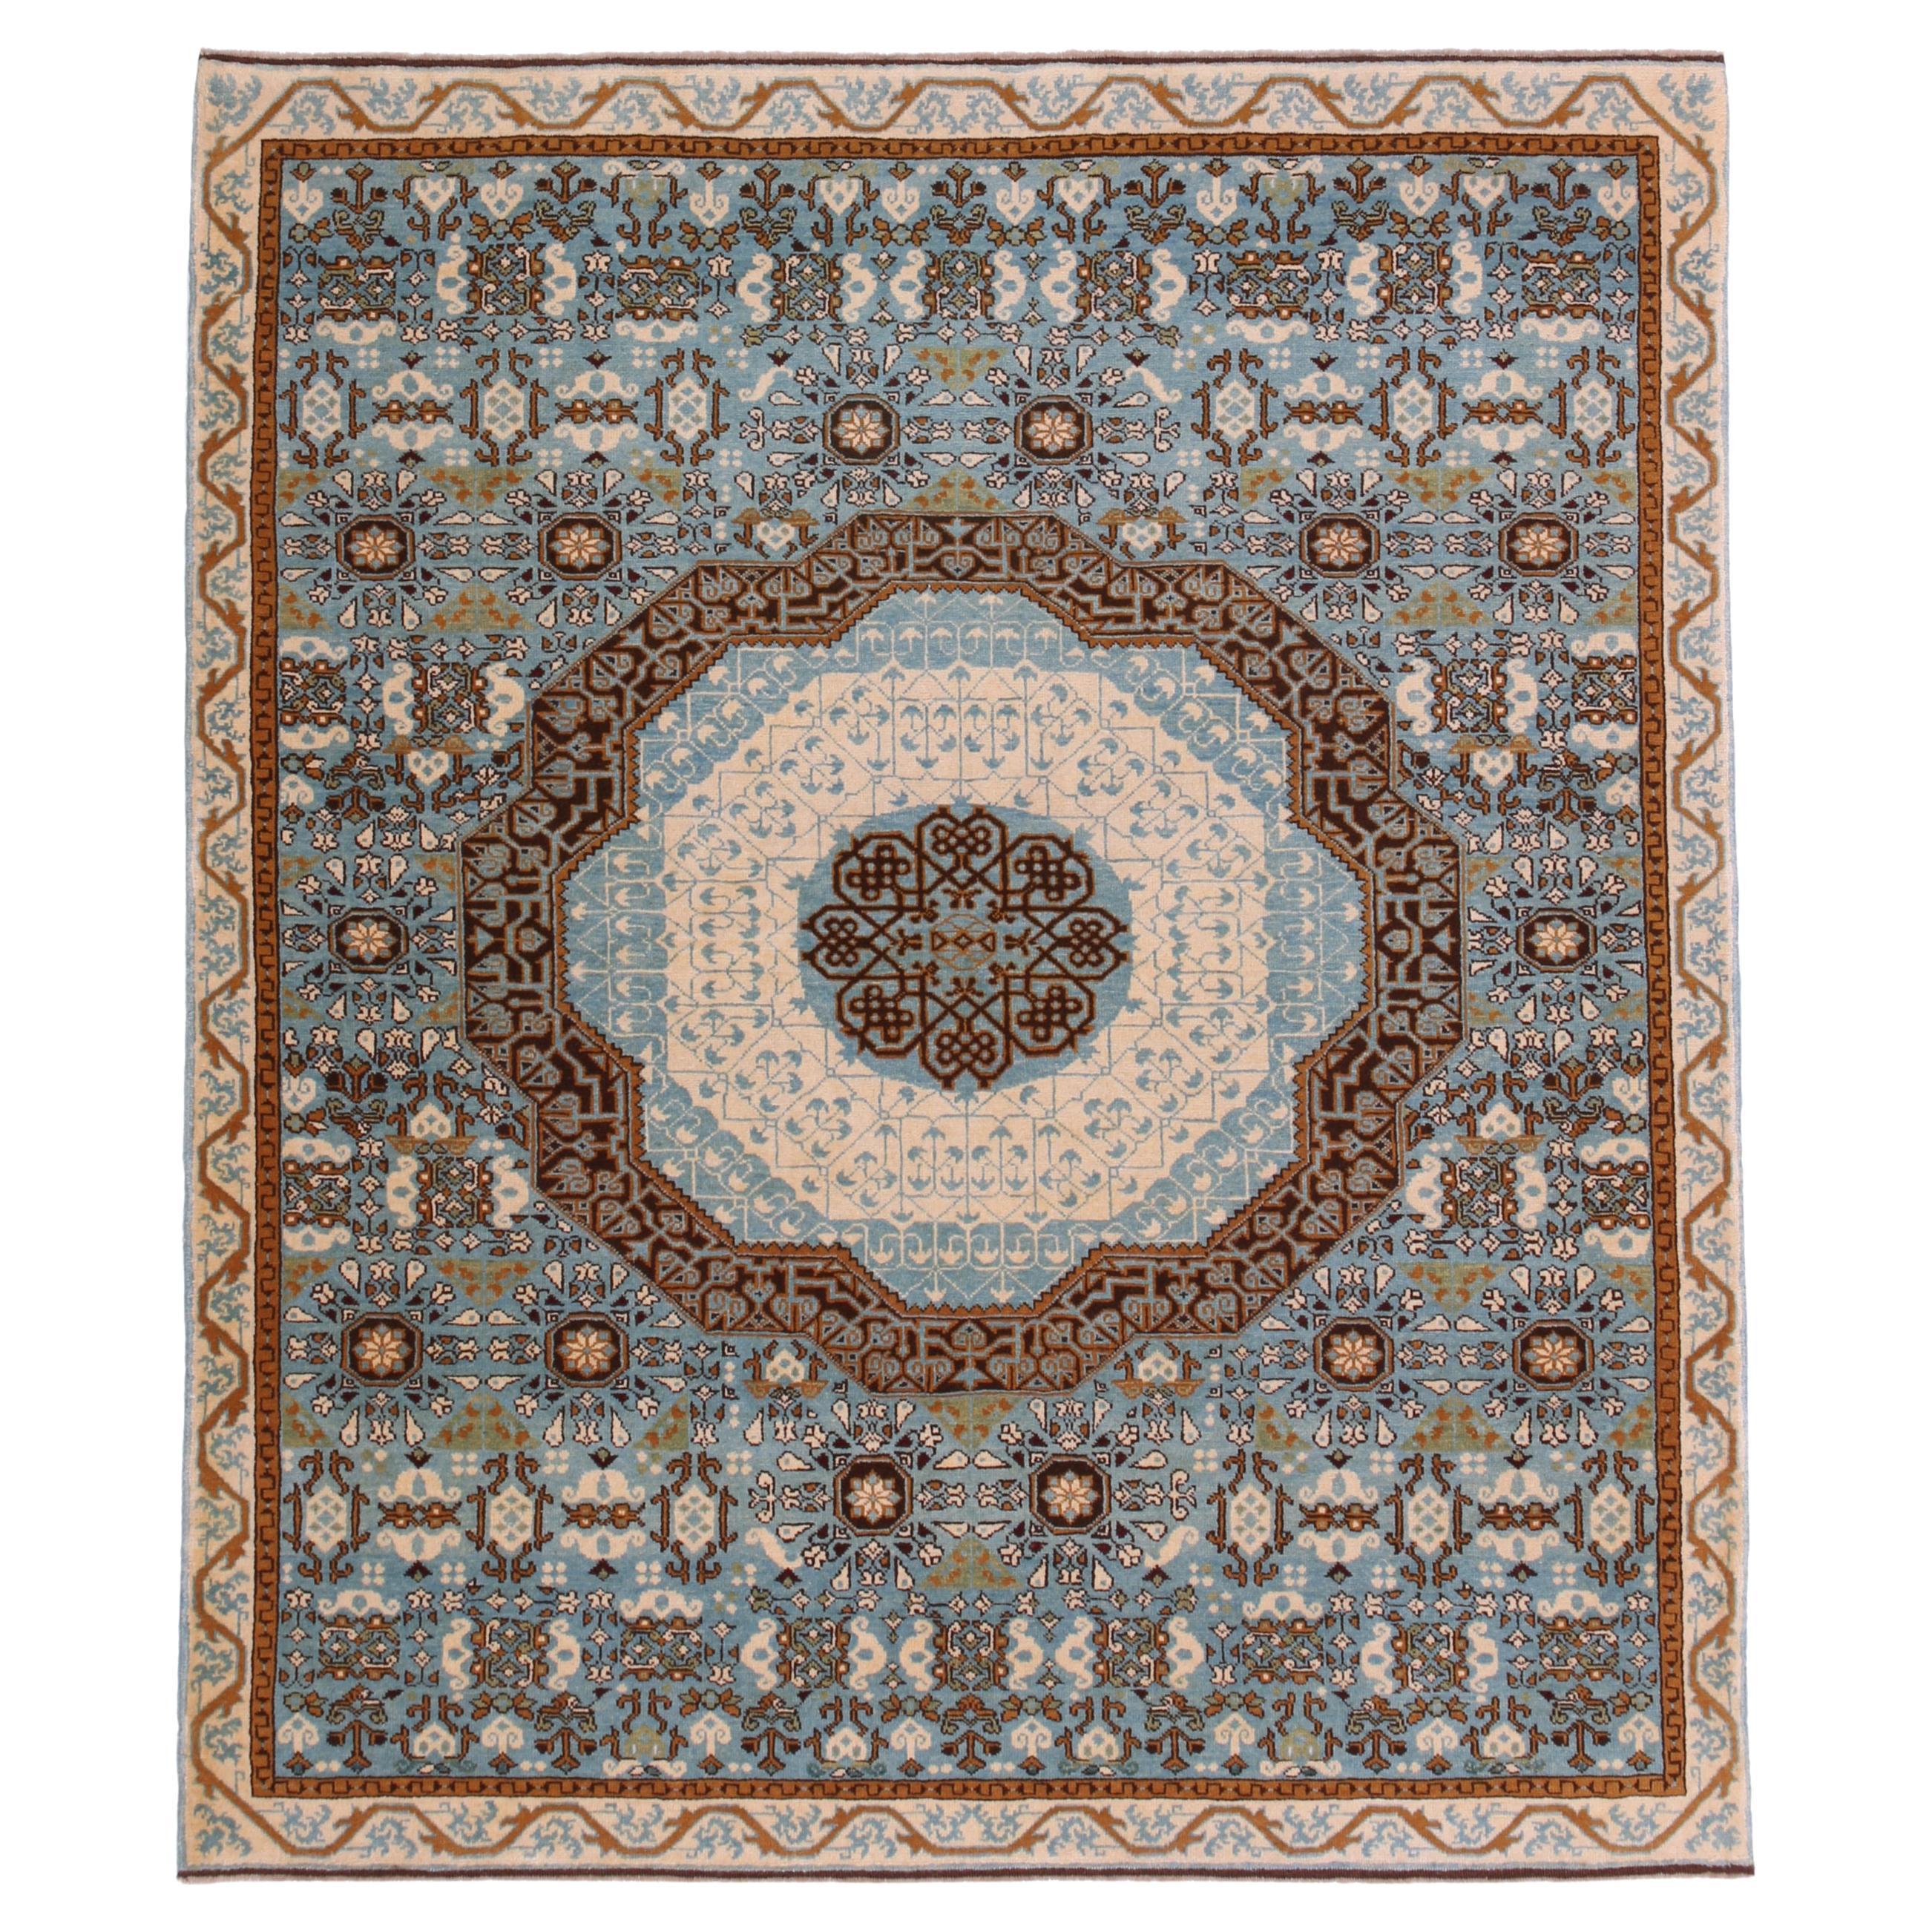 Ararat-Teppich Mamluk mit geschliffenem Medaillon Antiker Revival-Teppich Naturfarben